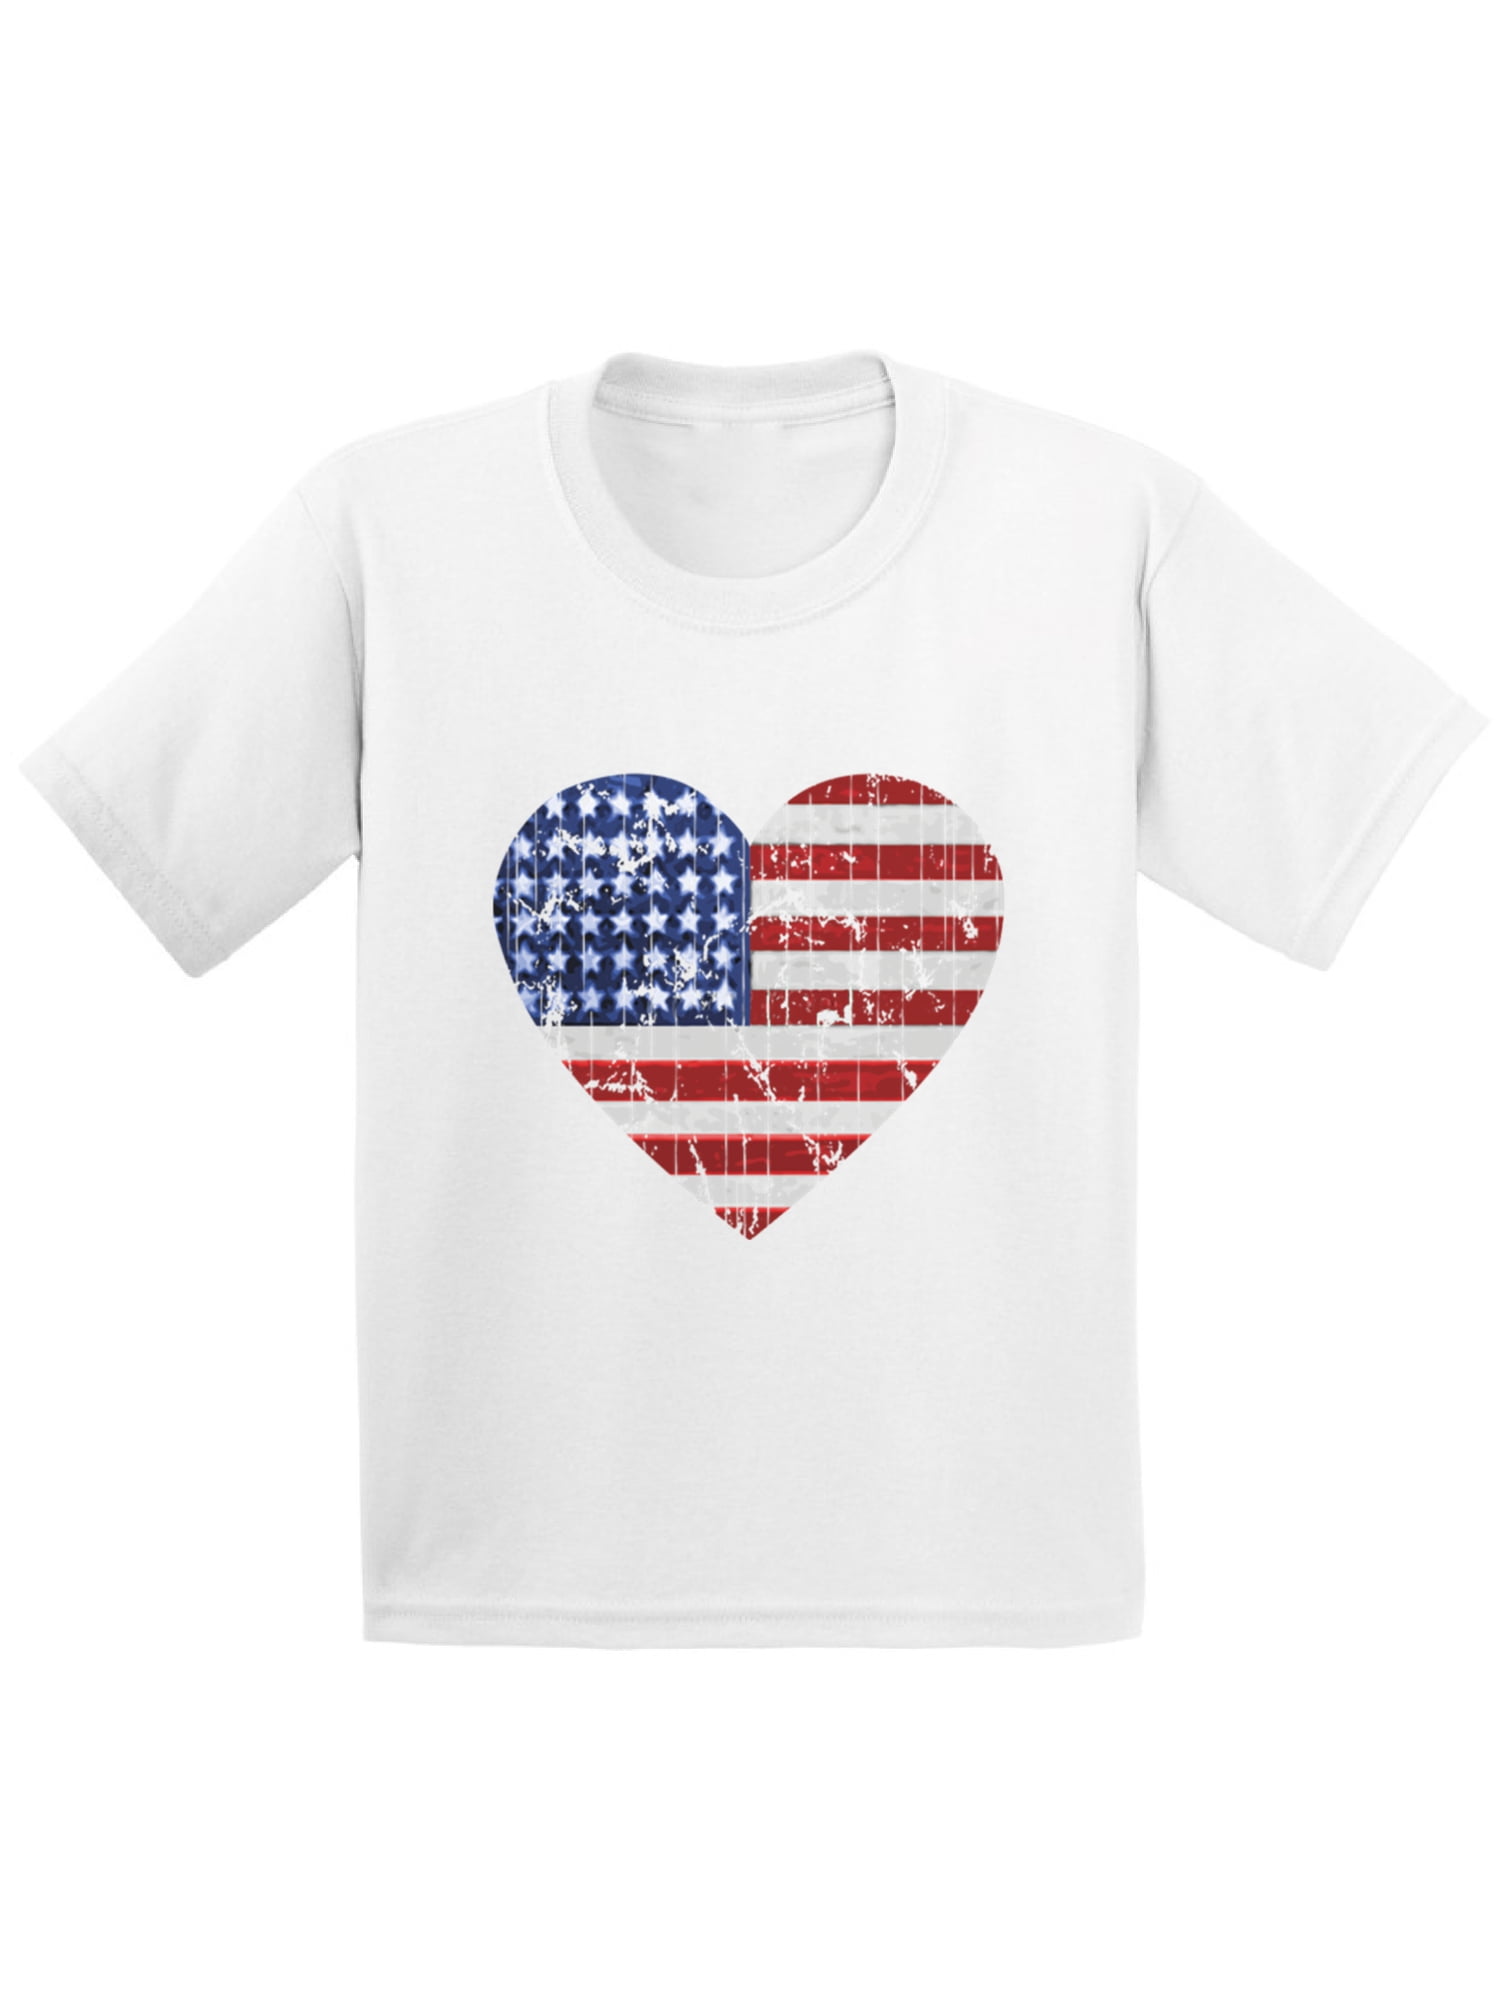 american flag shirt for kids